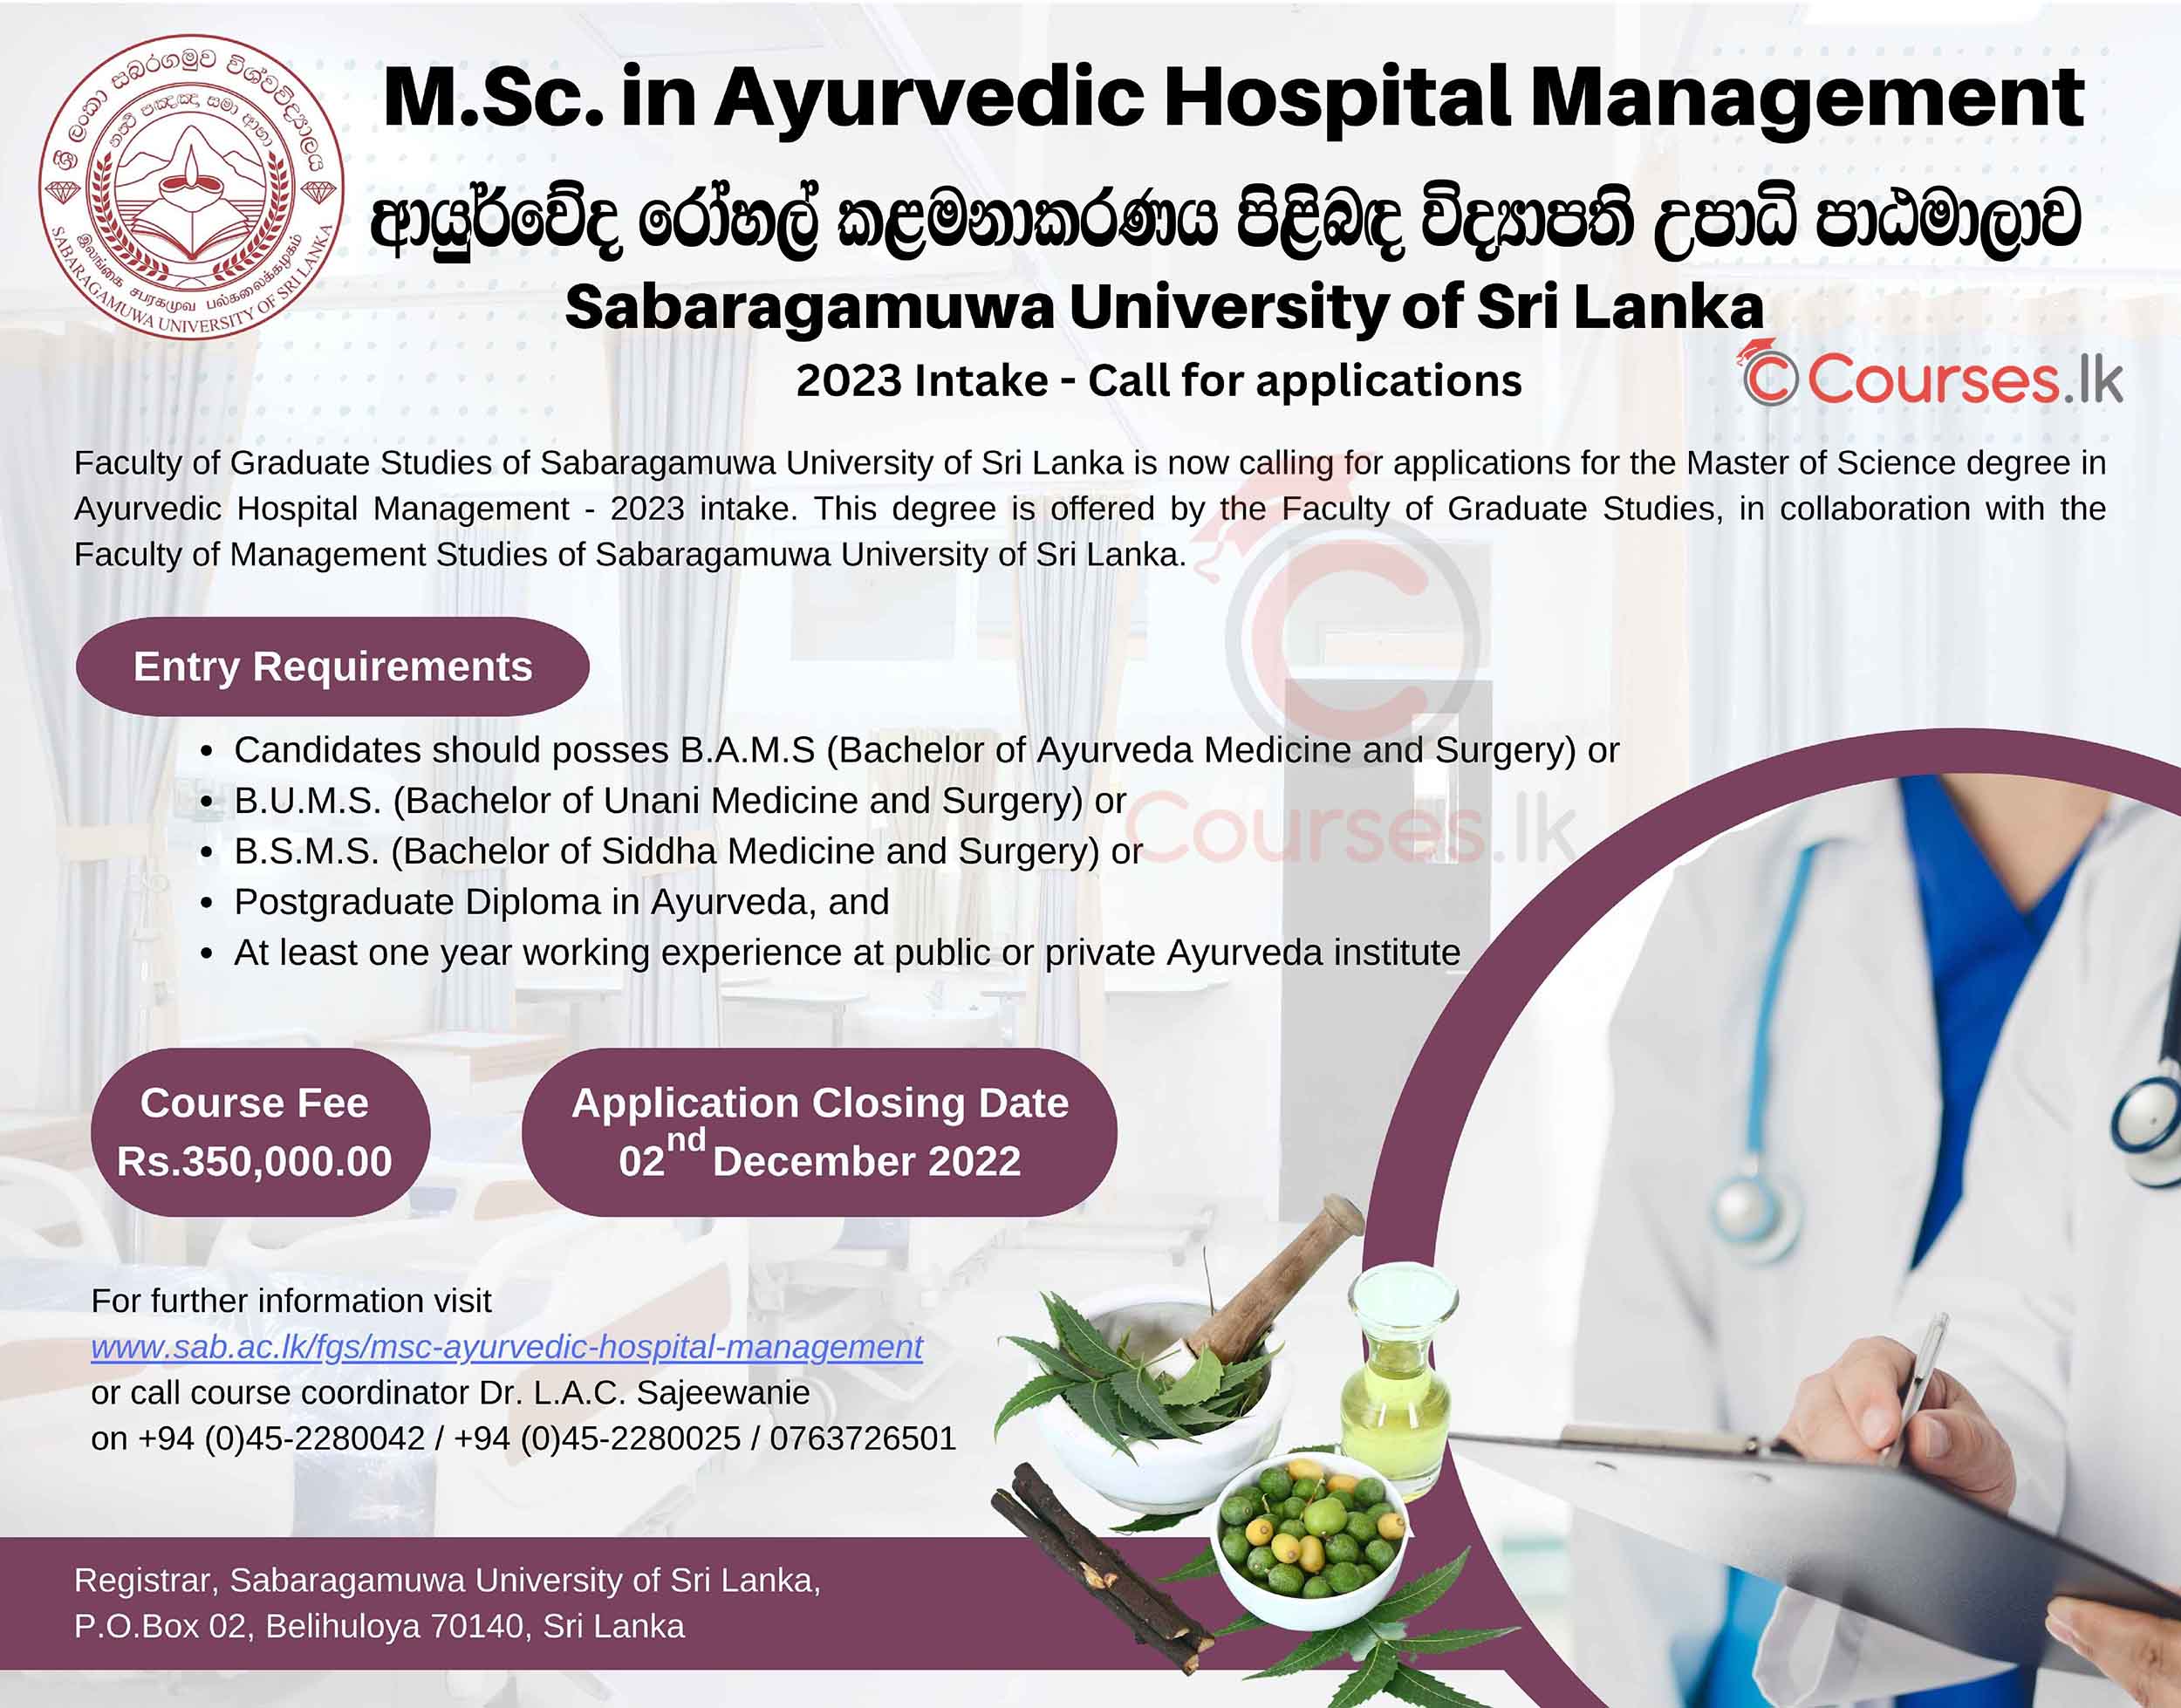 MSc in Ayurvedic Hospital Management 2023 - Sabaragamuwa University of Sri Lanka (SUSL)